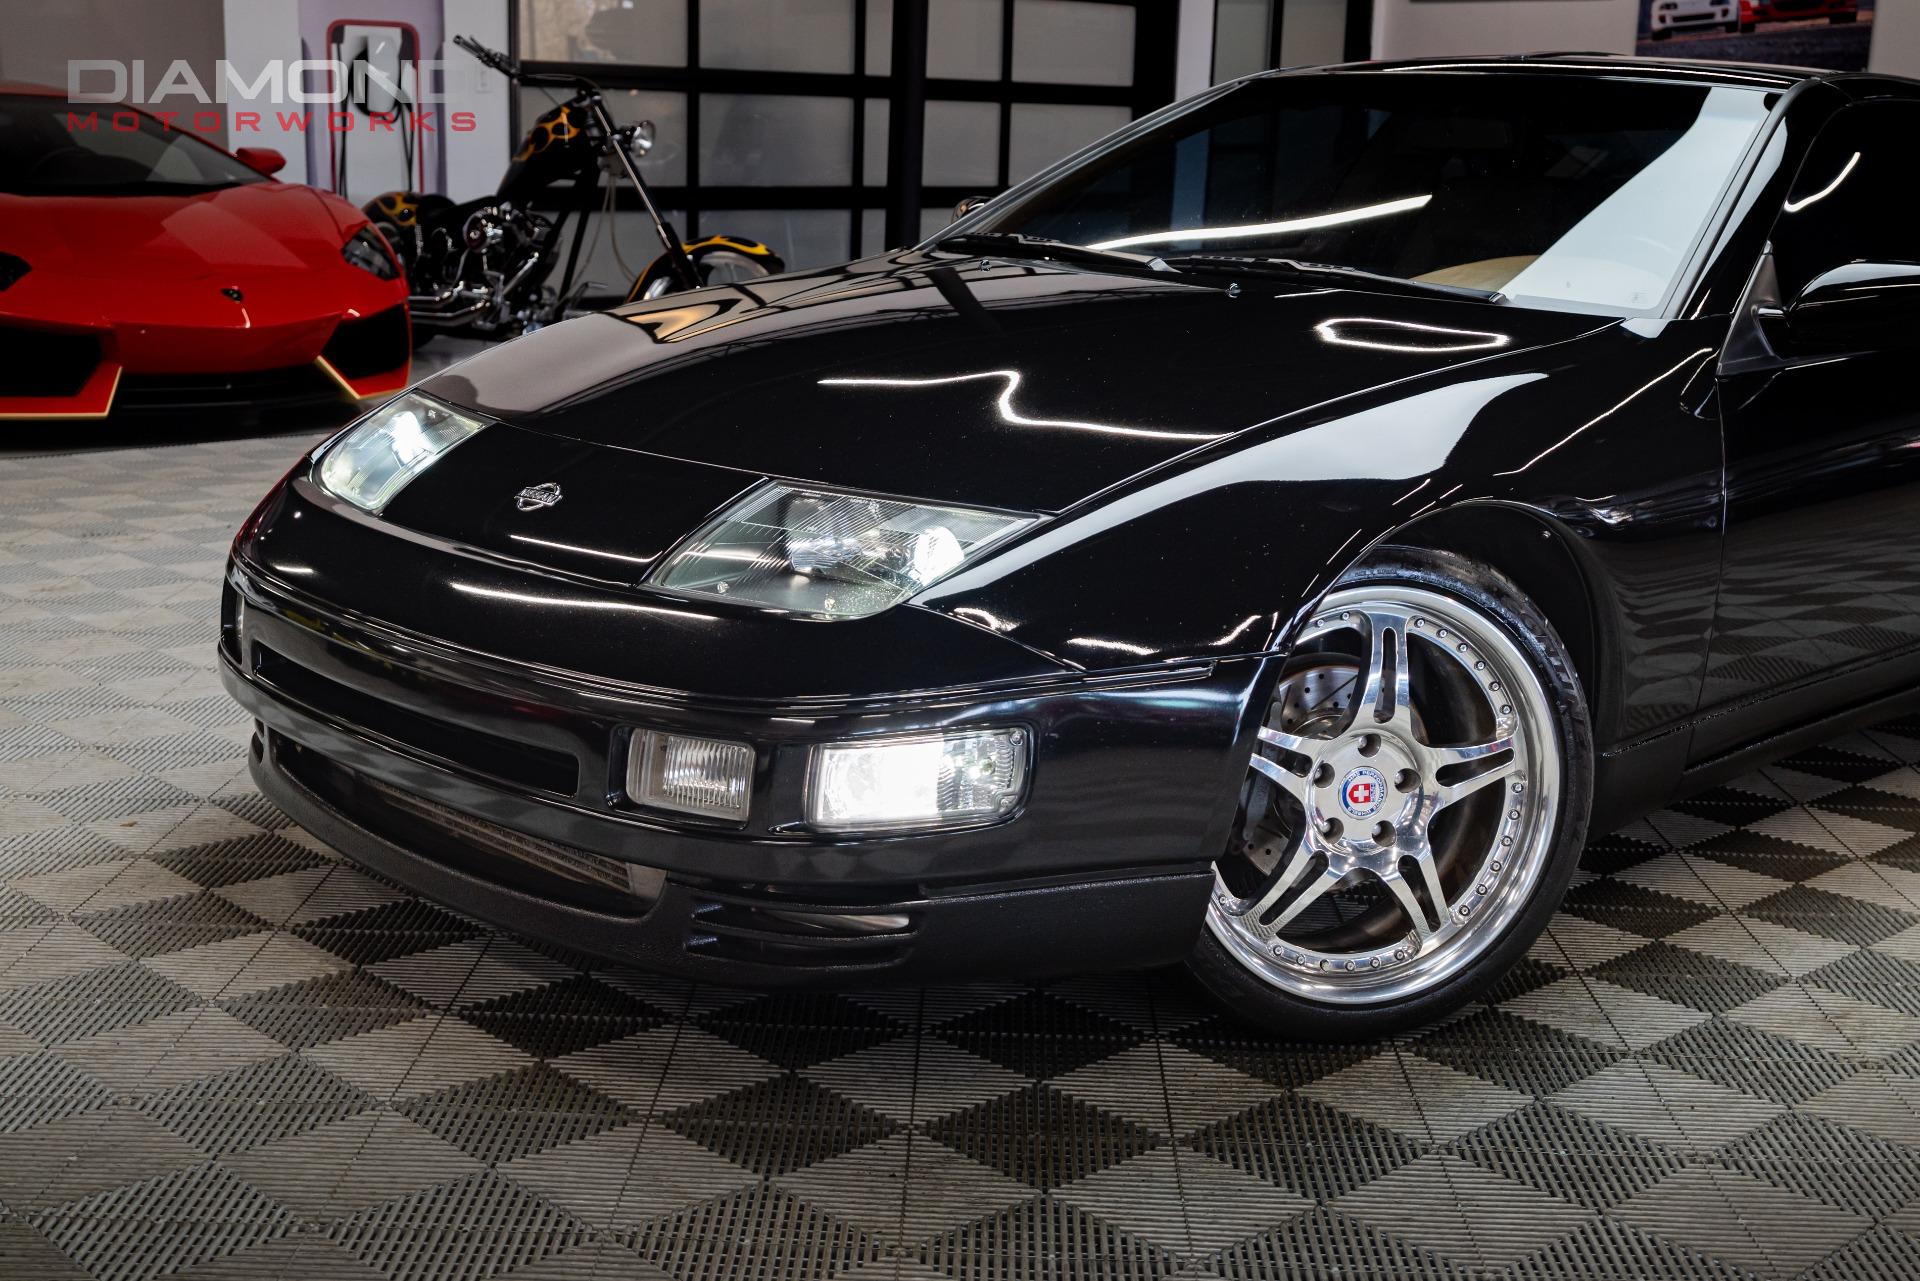 Used 1995 Nissan 300ZX Turbo For Sale ($34,800) | Diamond 